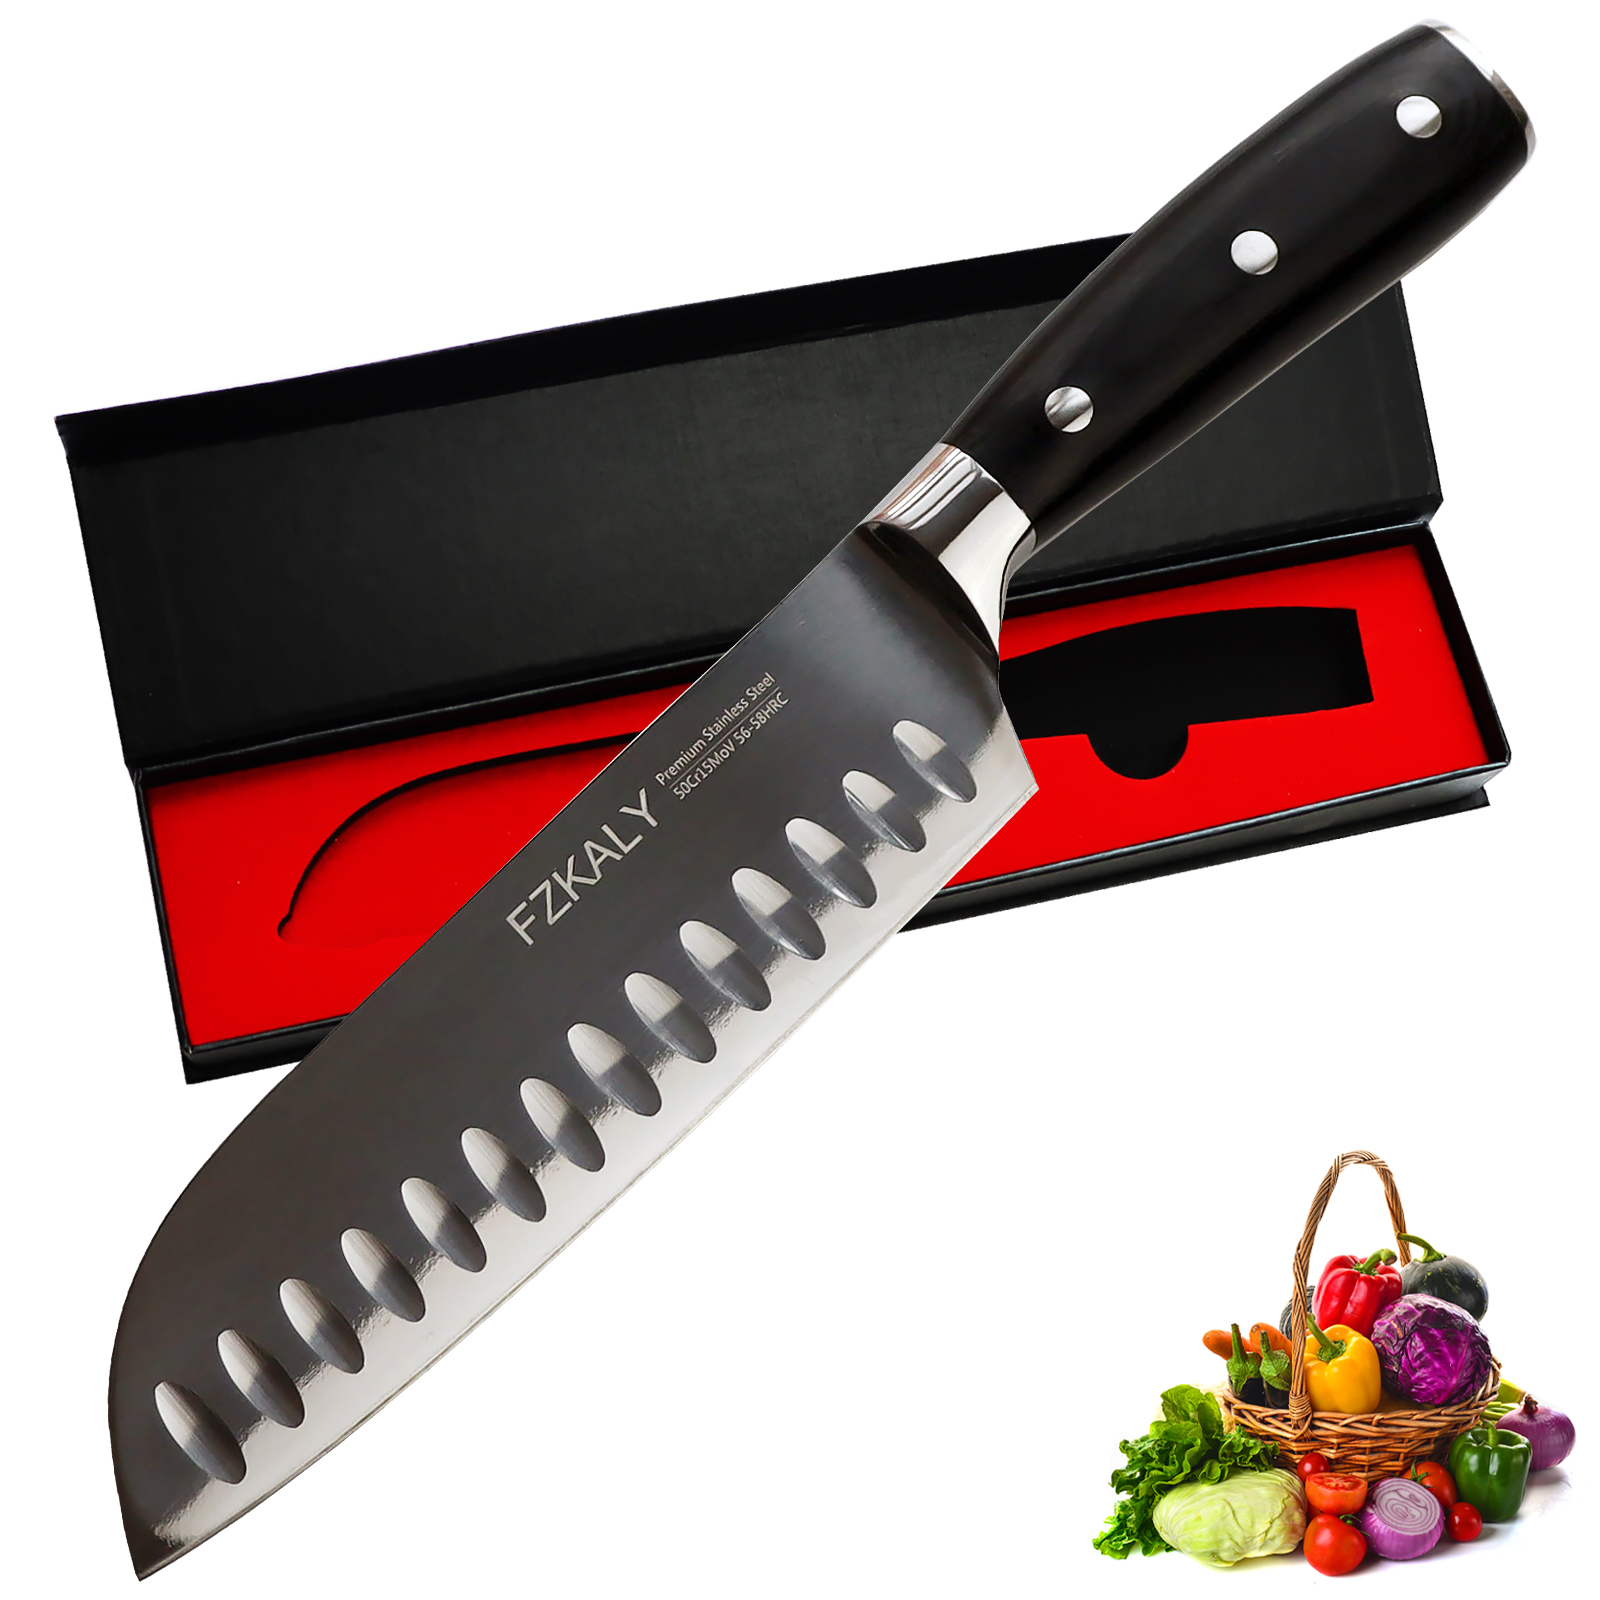 https://img-va.myshopline.com/image/store/1648111340947/7-inch-santoku-knife-classic.jpeg?w=1600&h=1600